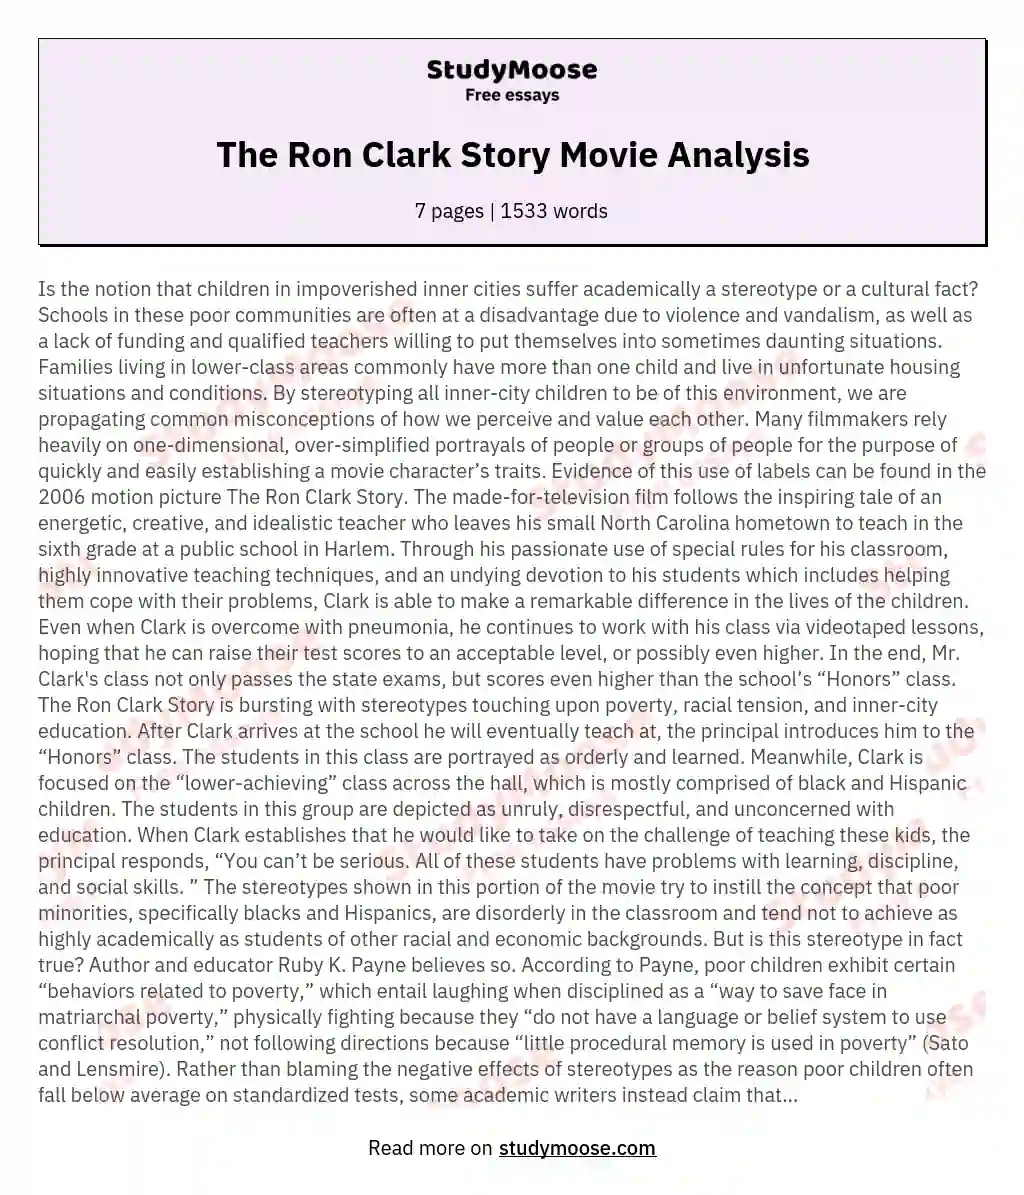 The Ron Clark Story Movie Analysis essay